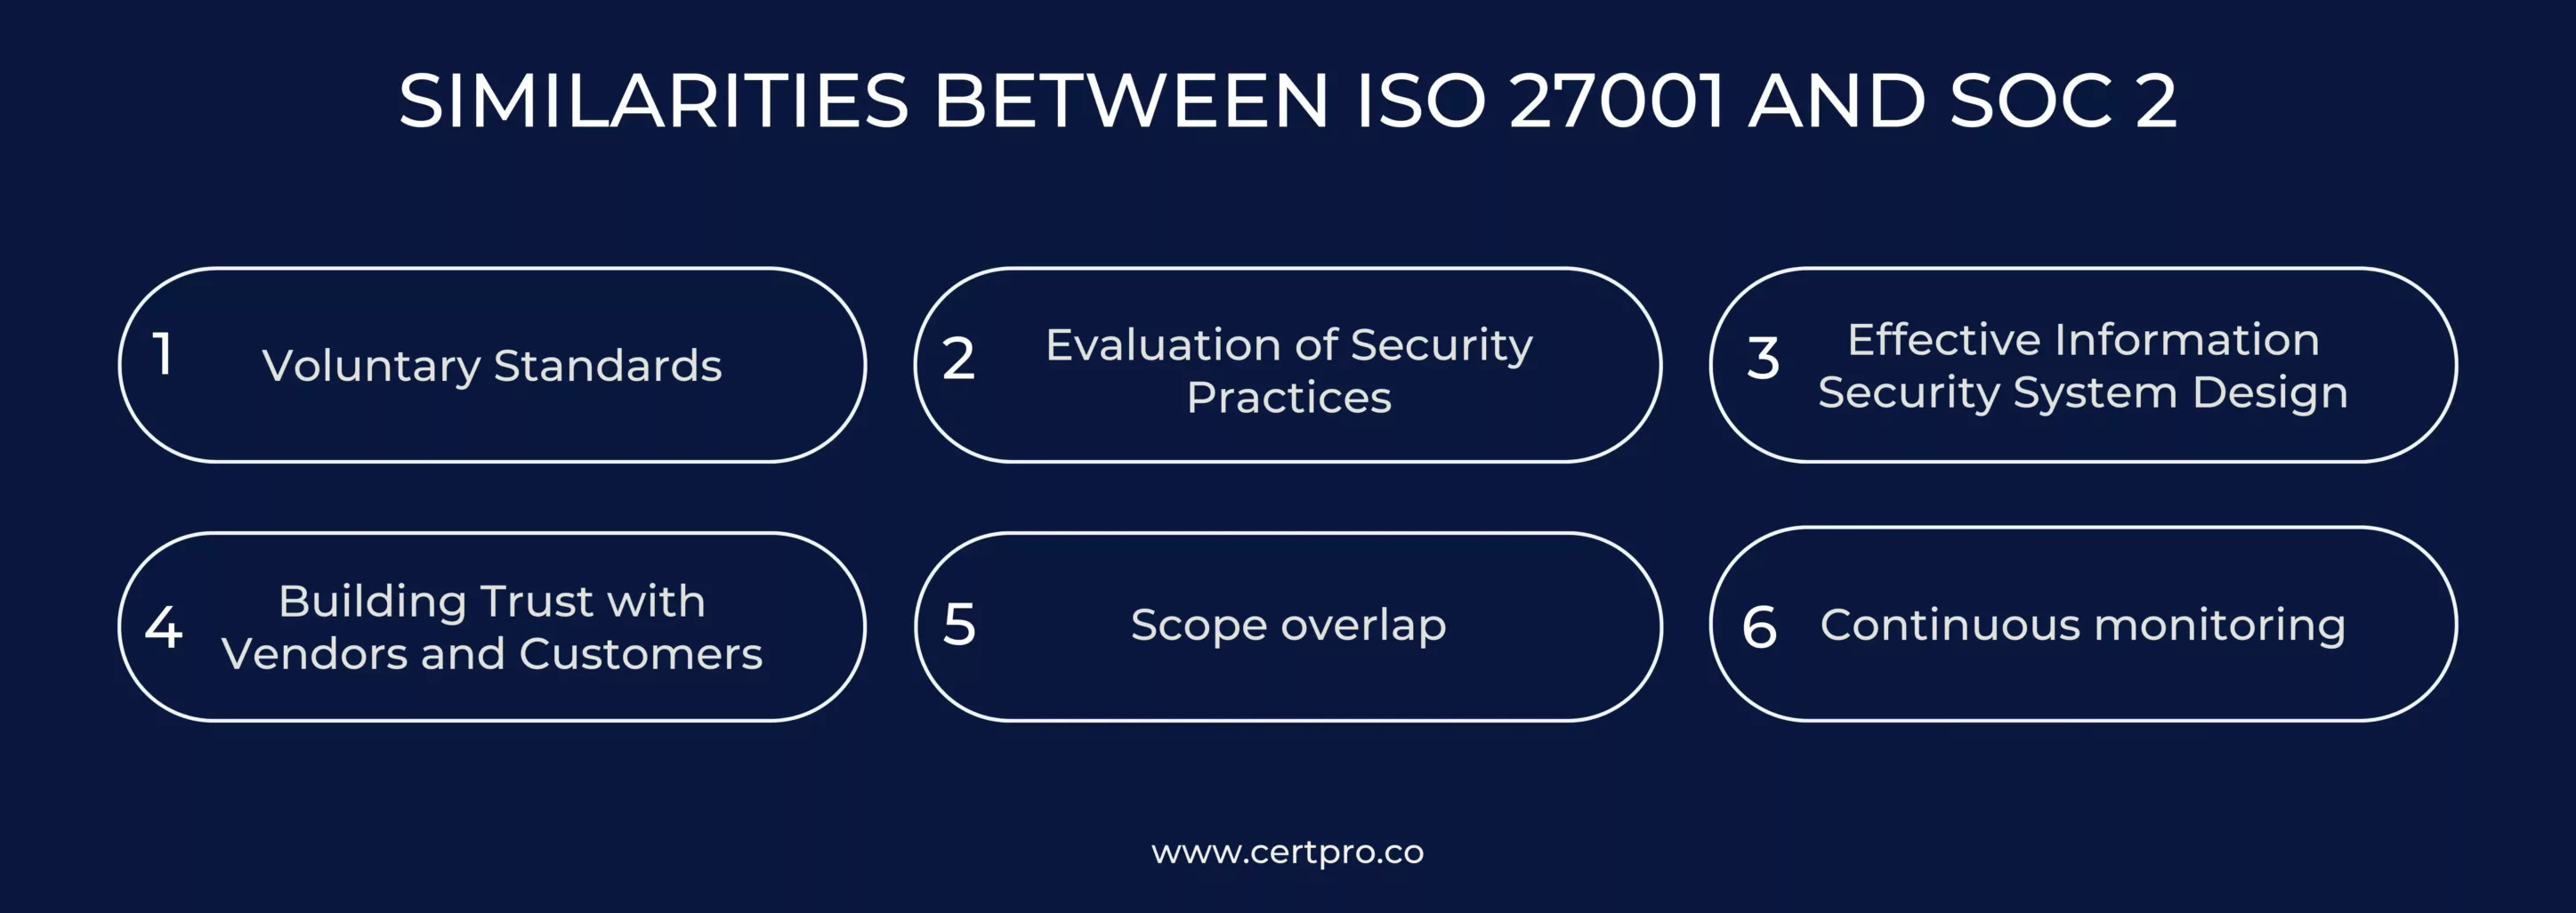 SIMILARITIES BETWEEN ISO 27001 AND SOC 2